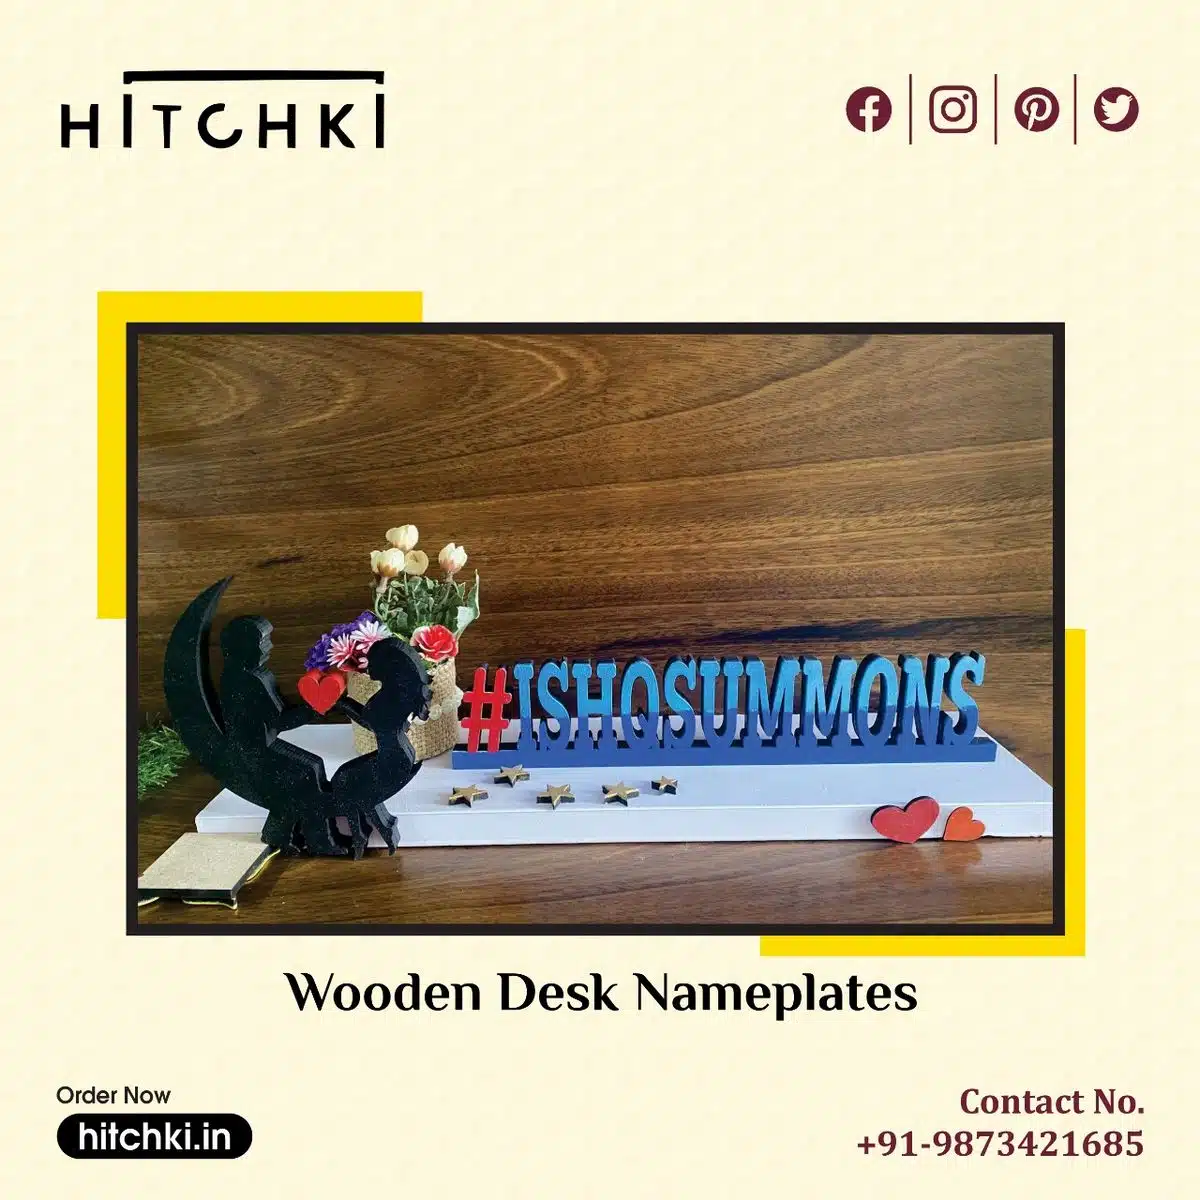 Wooden Desk Nameplates